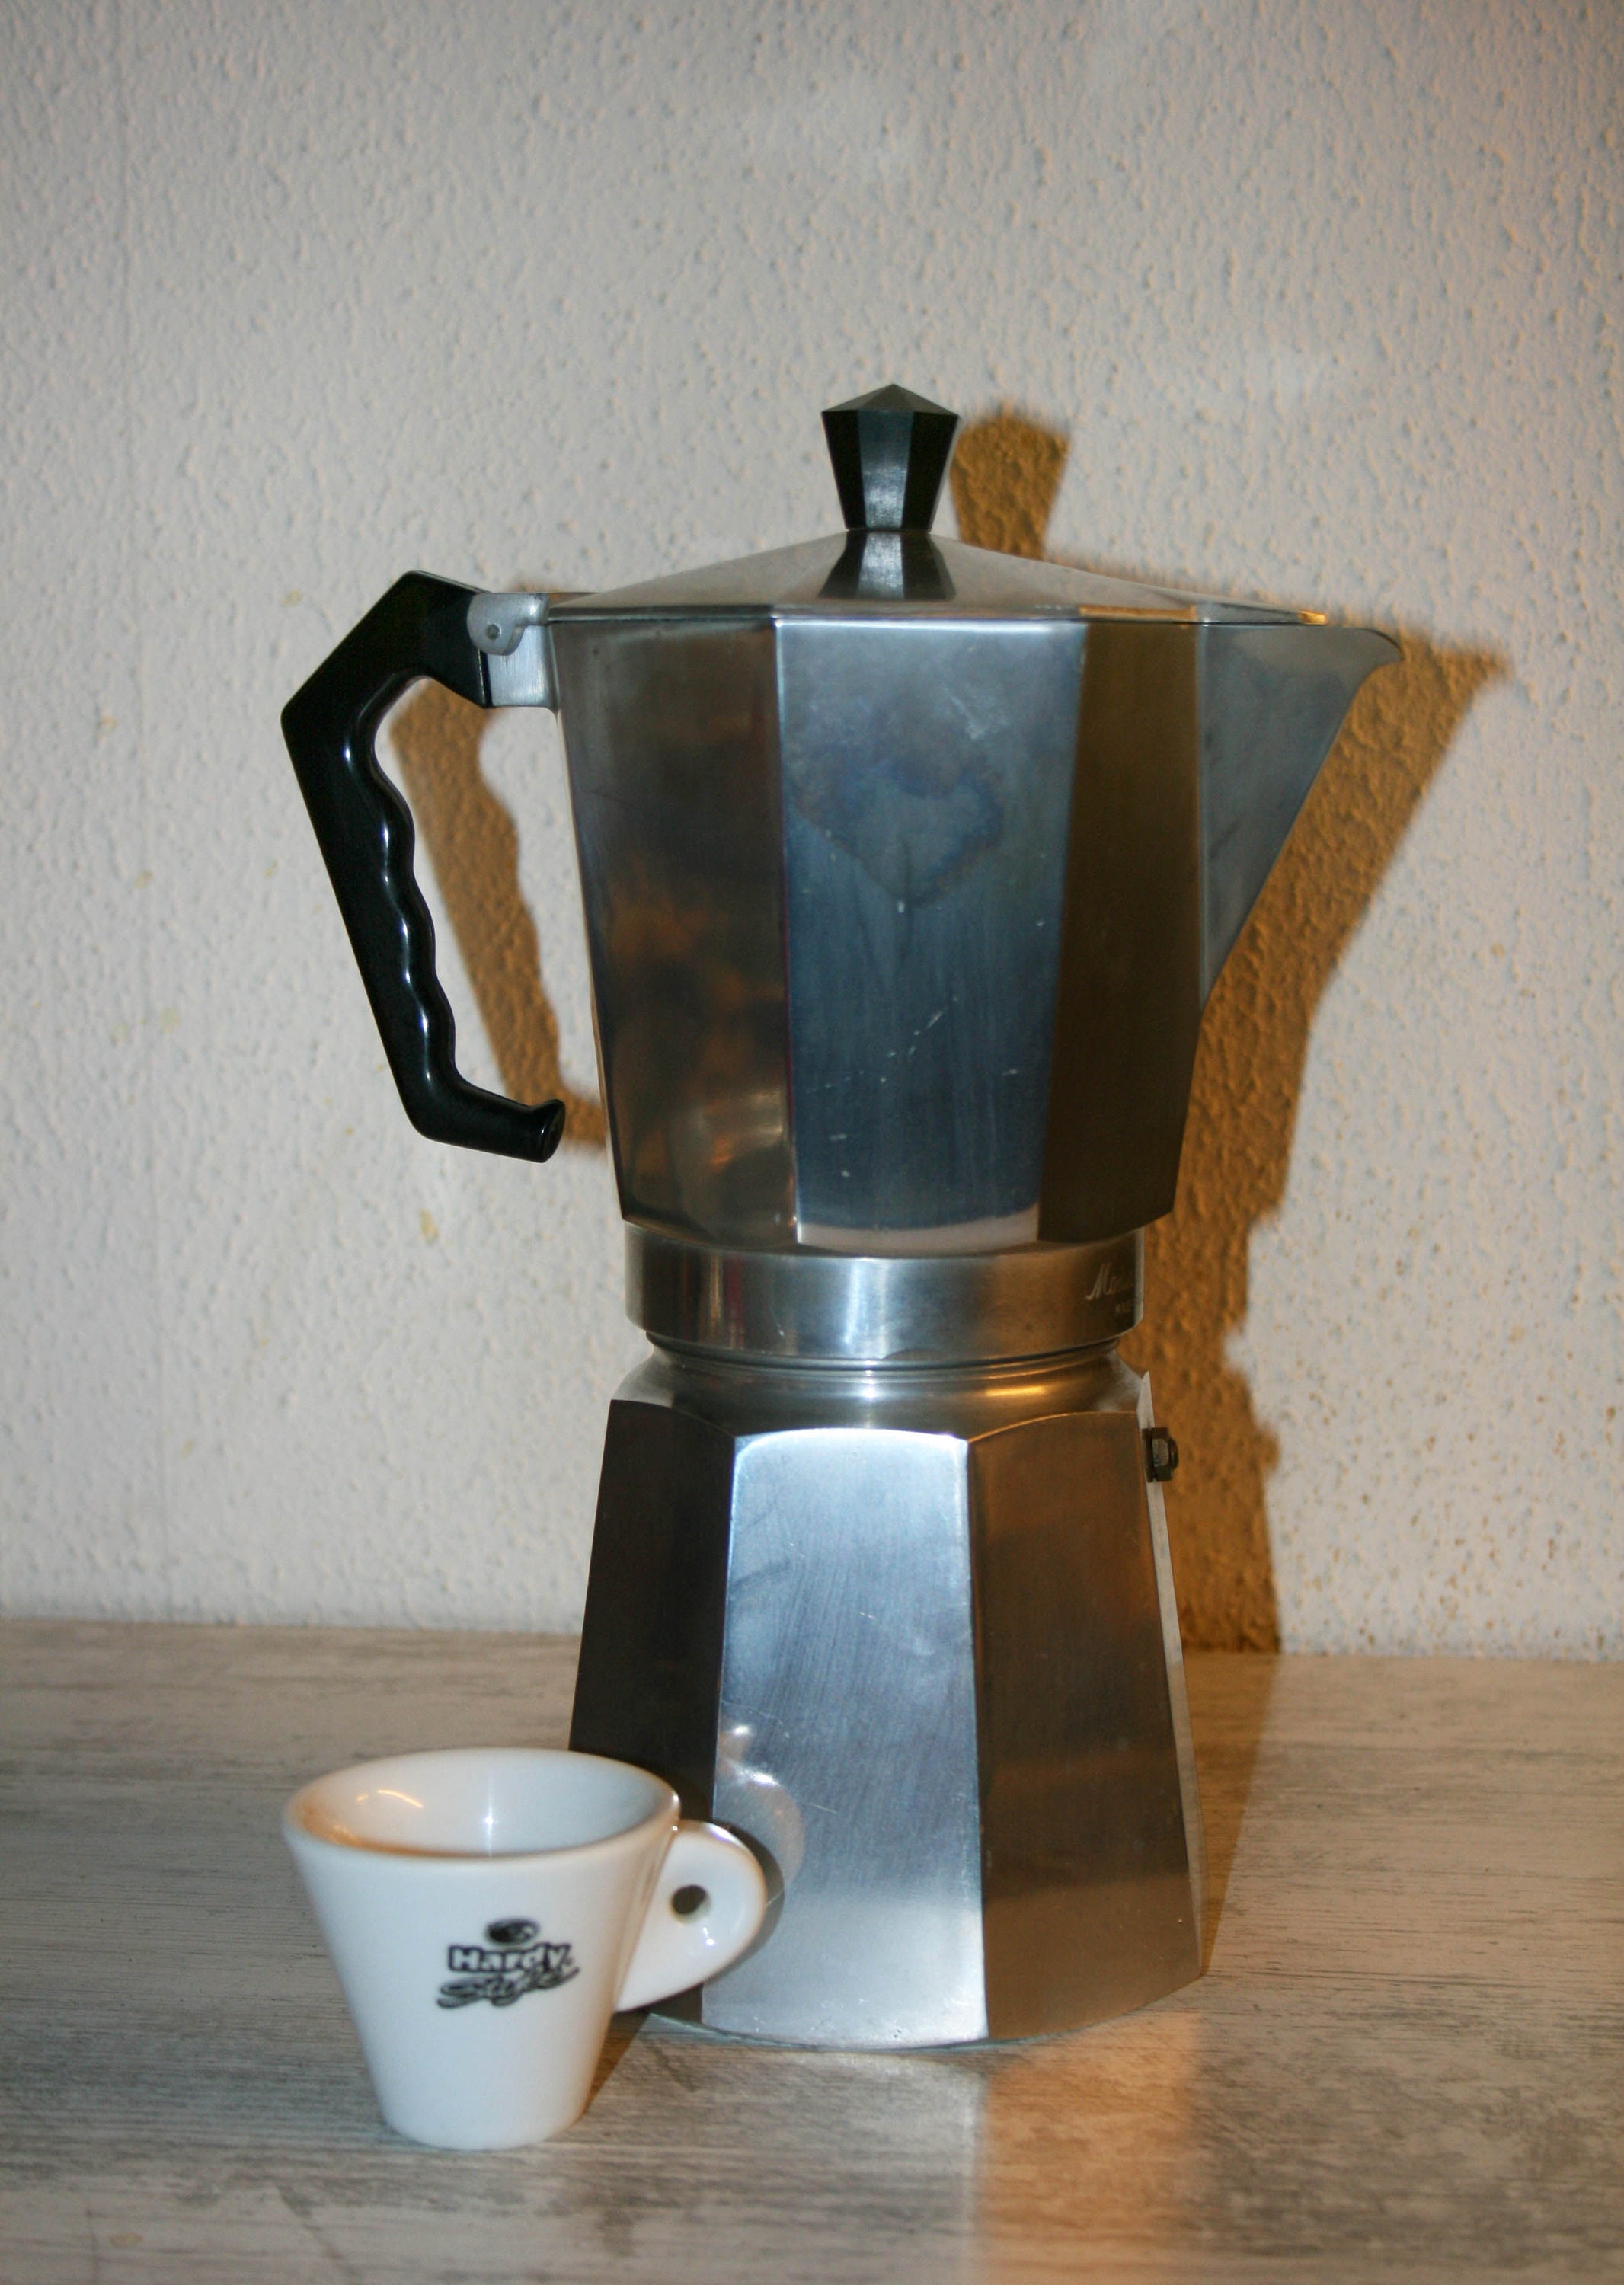 900+ Very RARE ..ANTIQUEand OLD Espresso coffee machines,Coffe